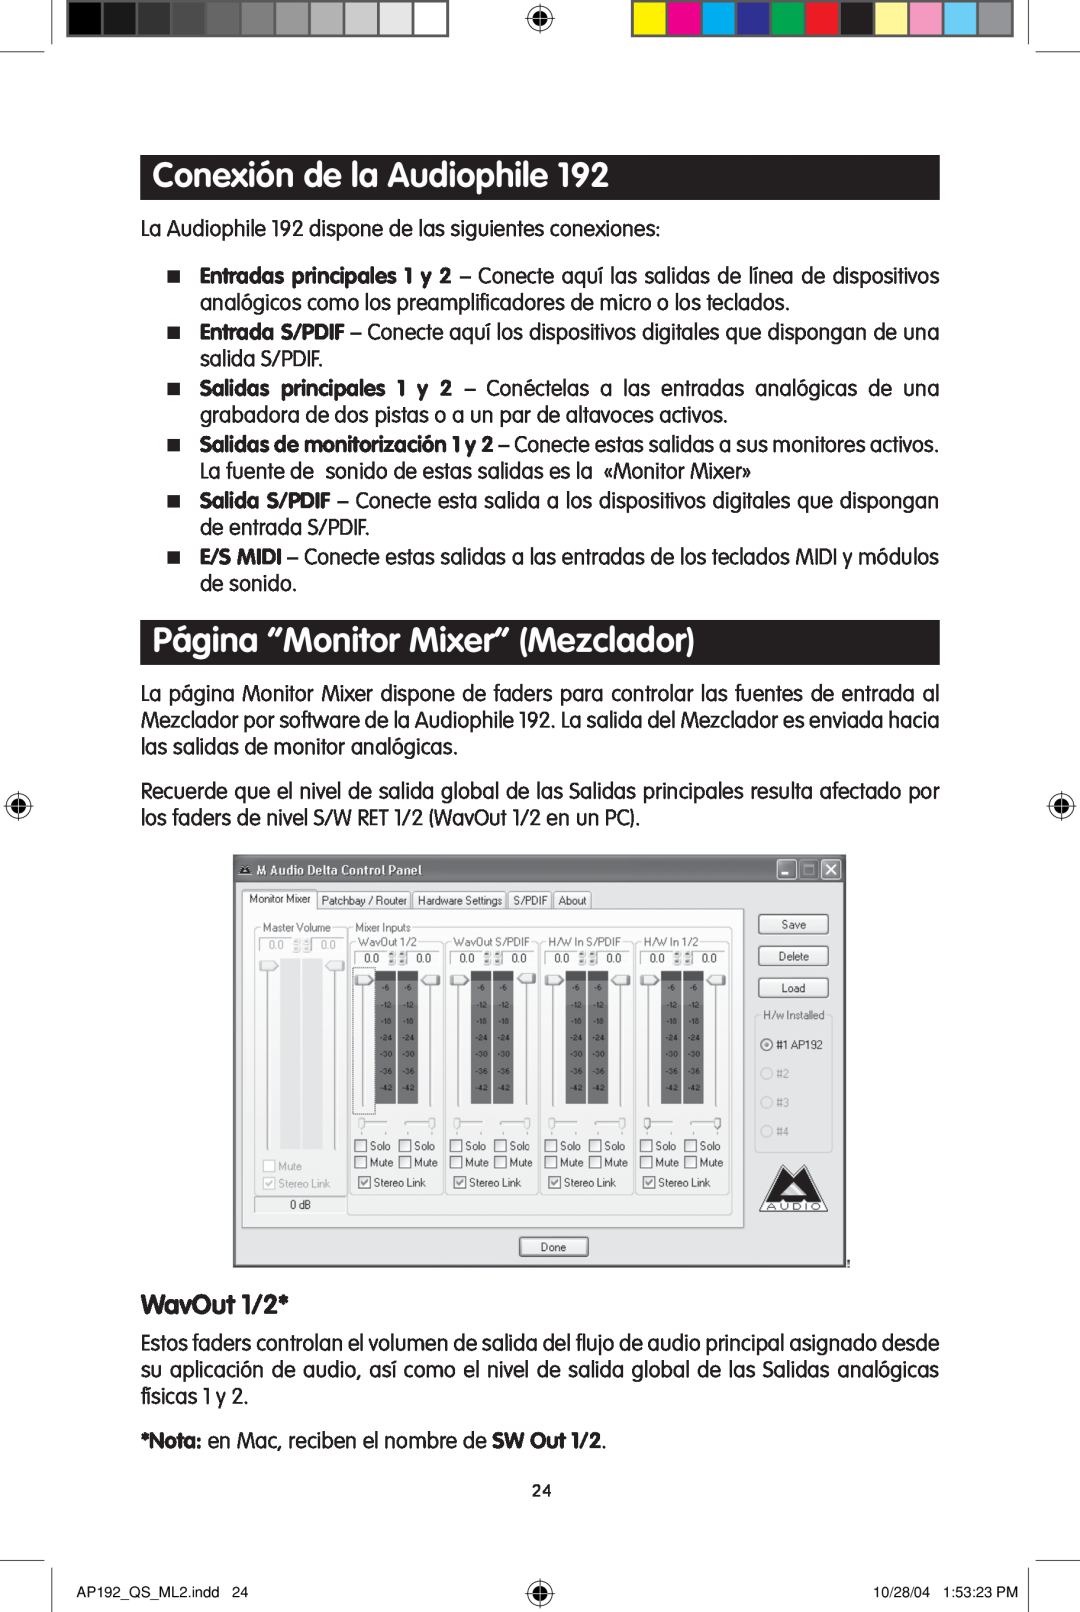 M-Audio 192s quick start Conexión de la Audiophile, Página “Monitor Mixer” Mezclador, WavOut 1/2 